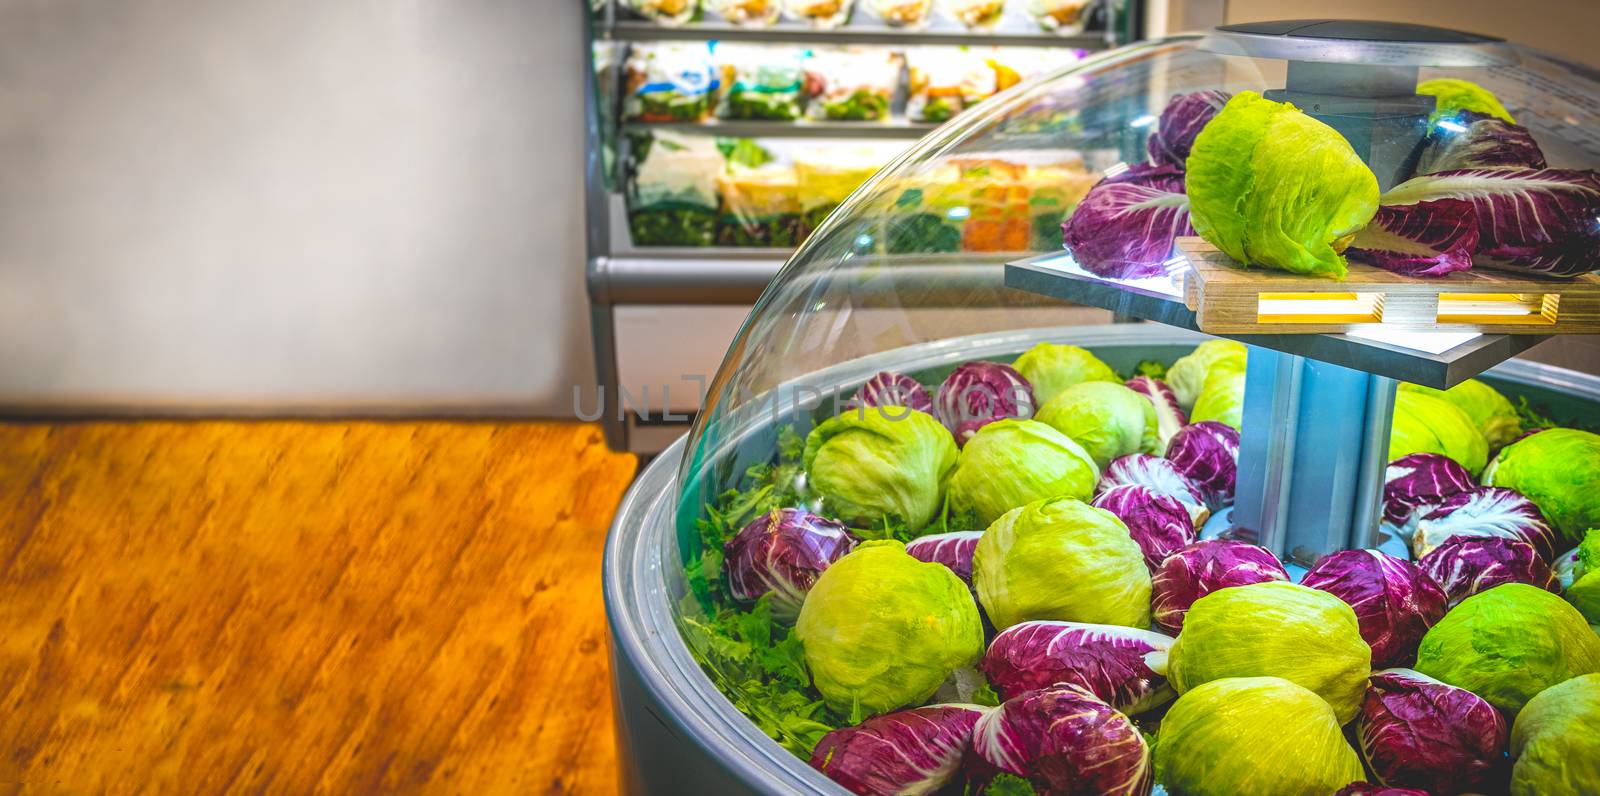 vegetable market refrigerator lettuce salad at supermarket horizontal background by LucaLorenzelli